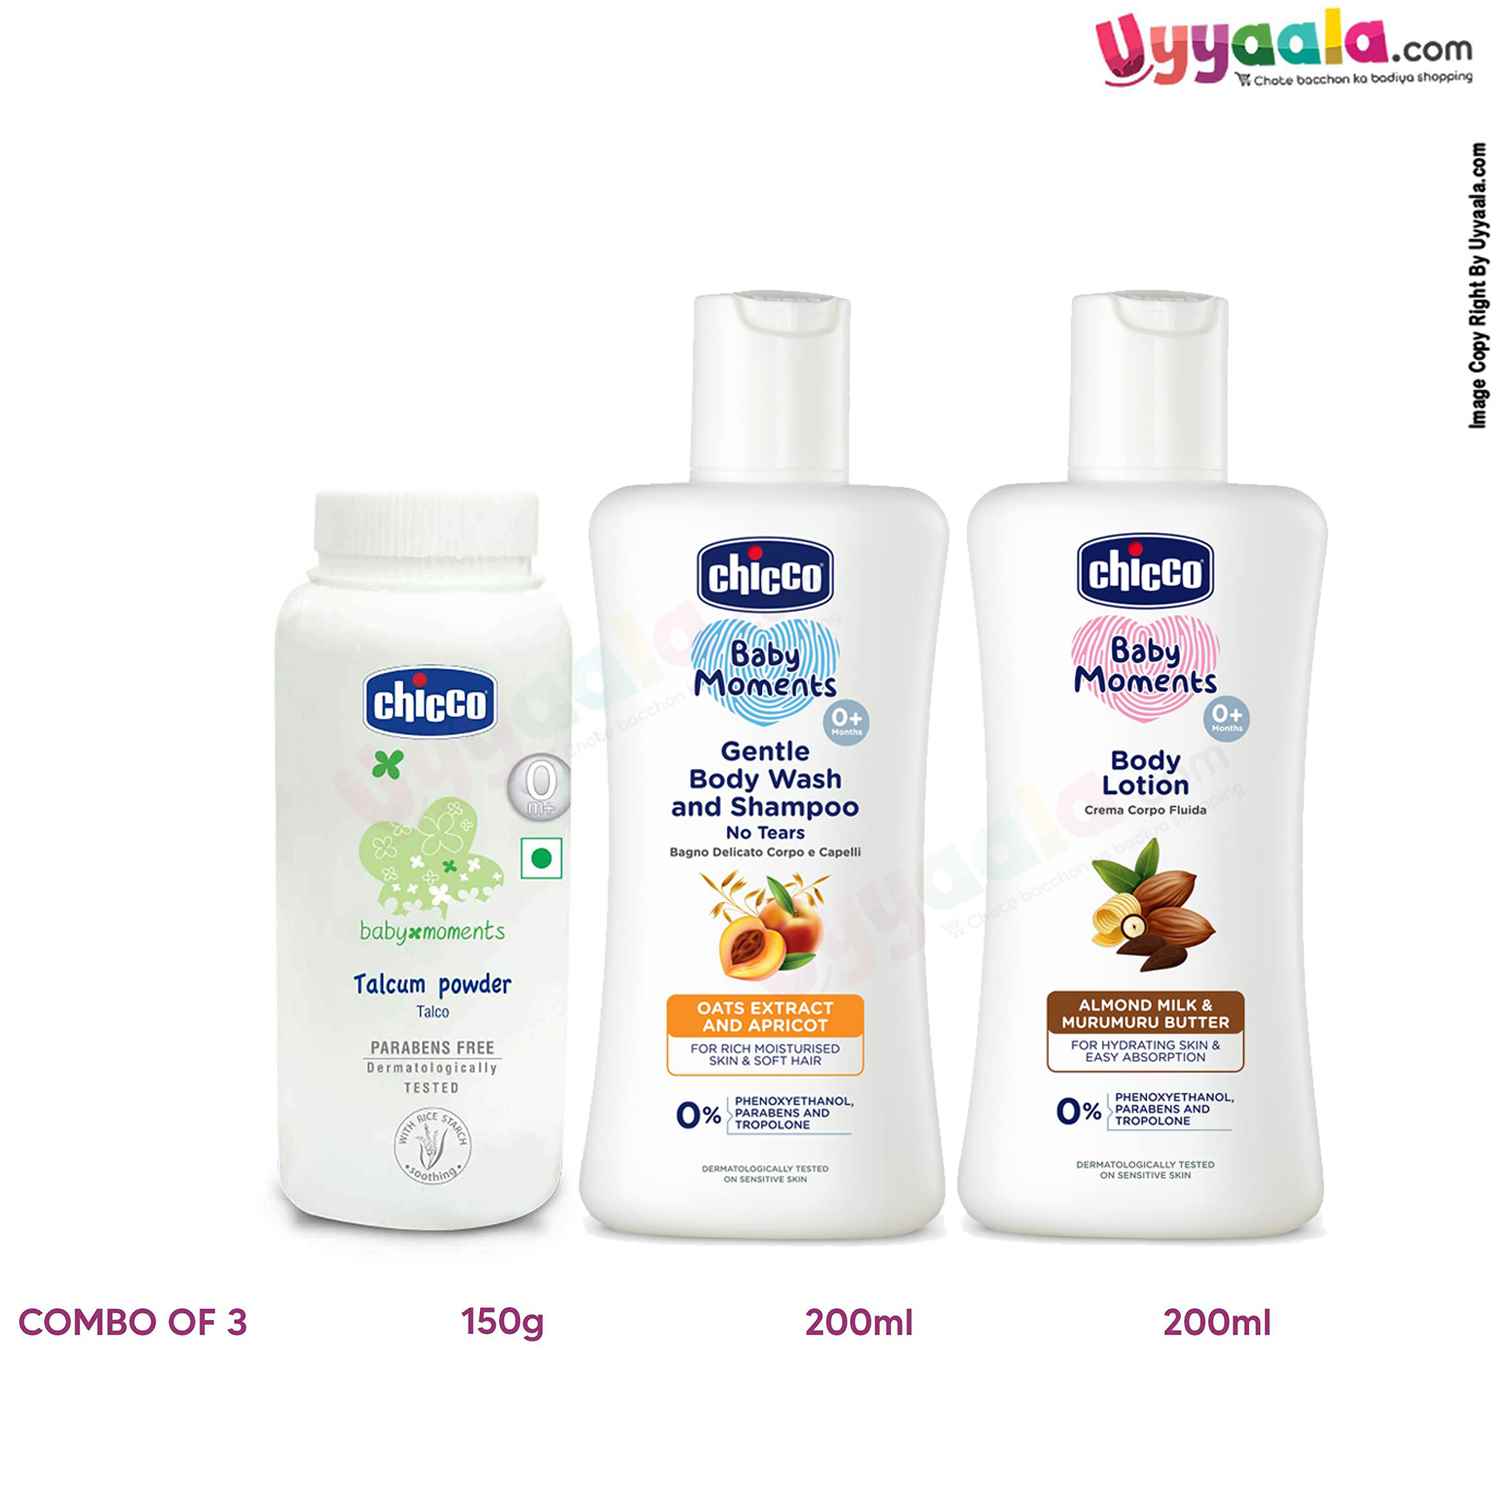 CHICCO Baby moments combo pack(Talcum powder - 150g, Body wash & shampoo - 200ml, Body lotion - 200ml)